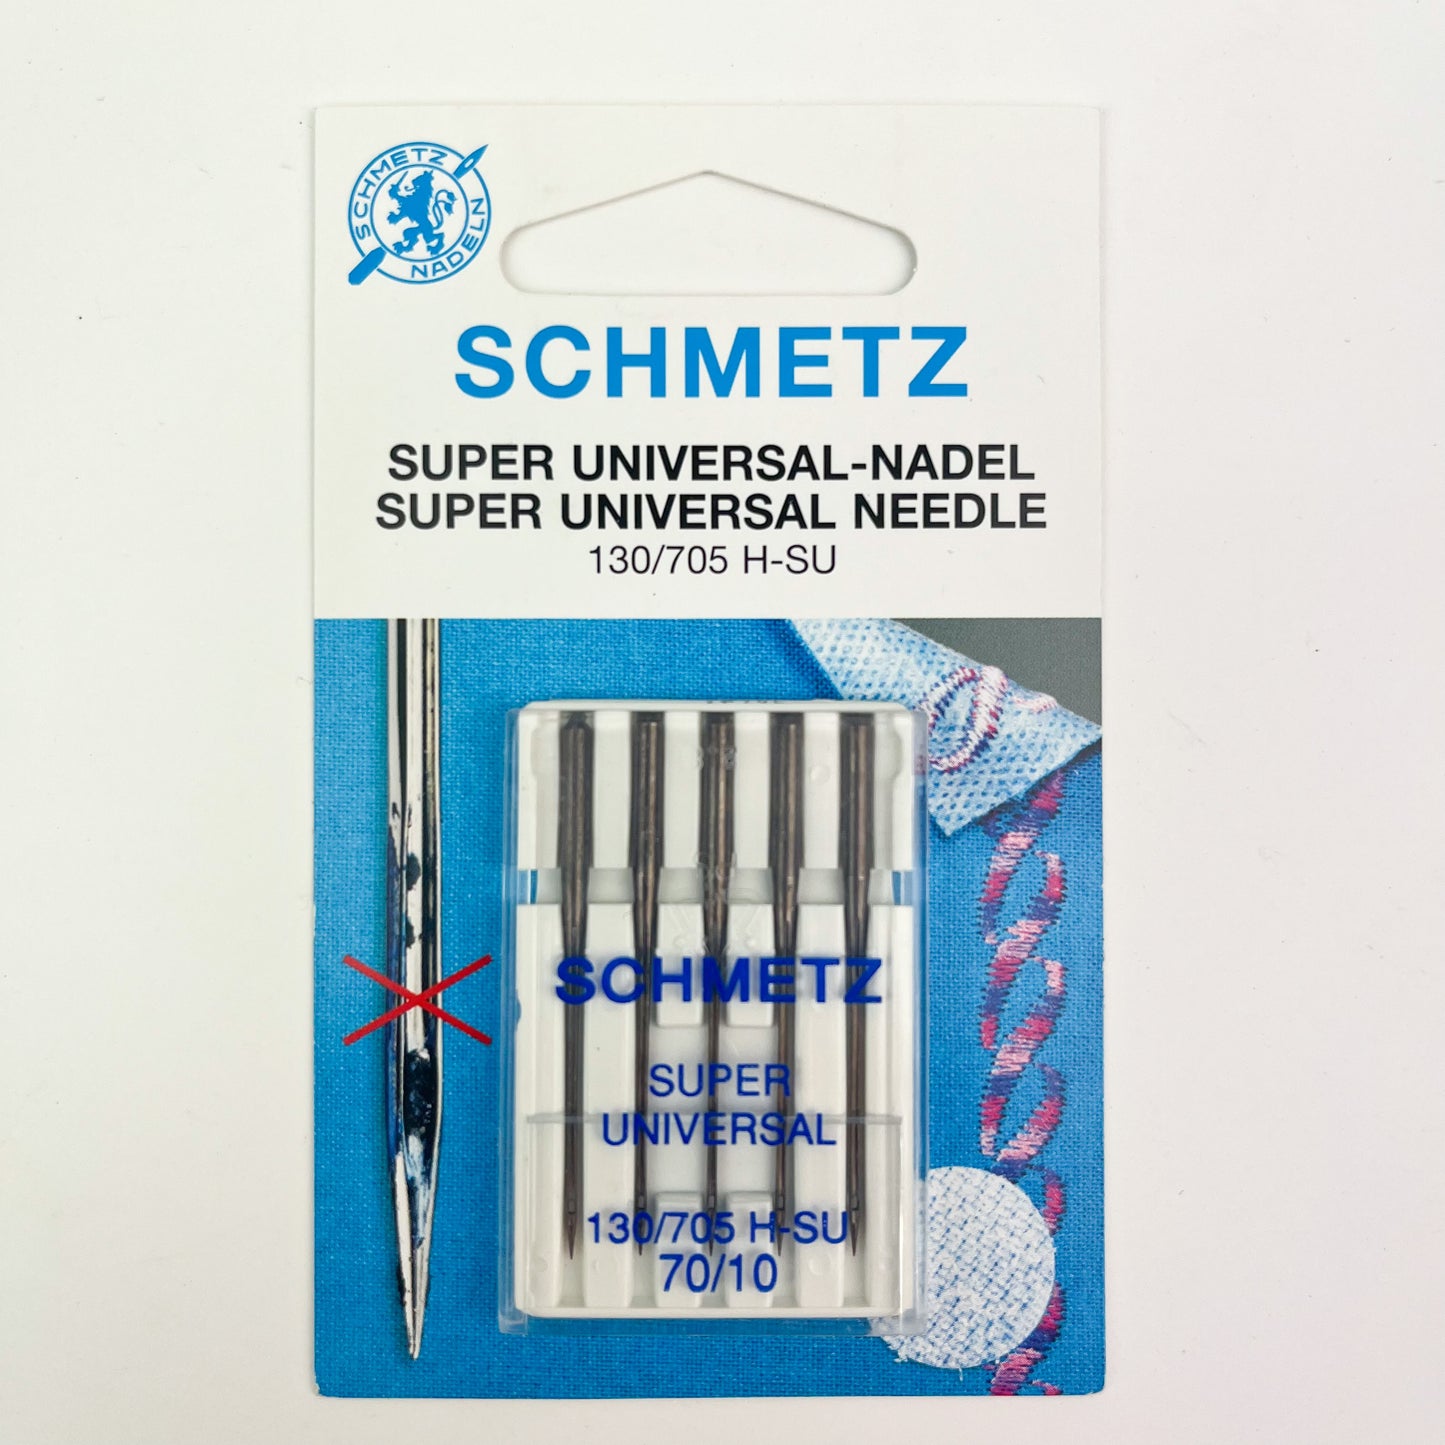 Schmetz - SUPER Universal (anti-adhesive) - Assorted Sizes